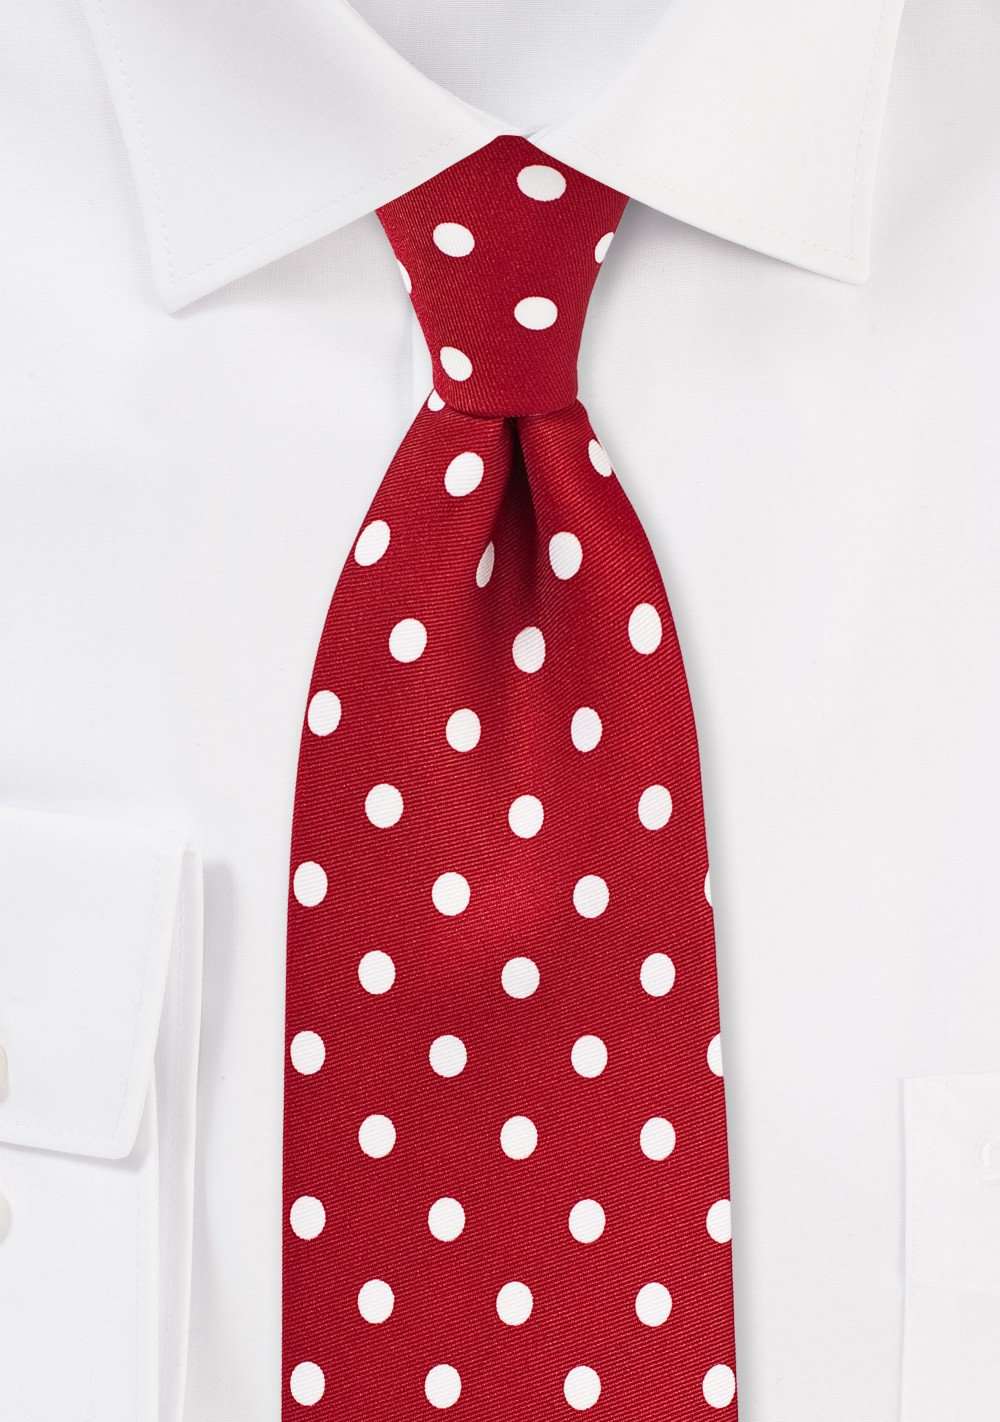 Tomato Red and White Polka Dot Necktie - Men Suits